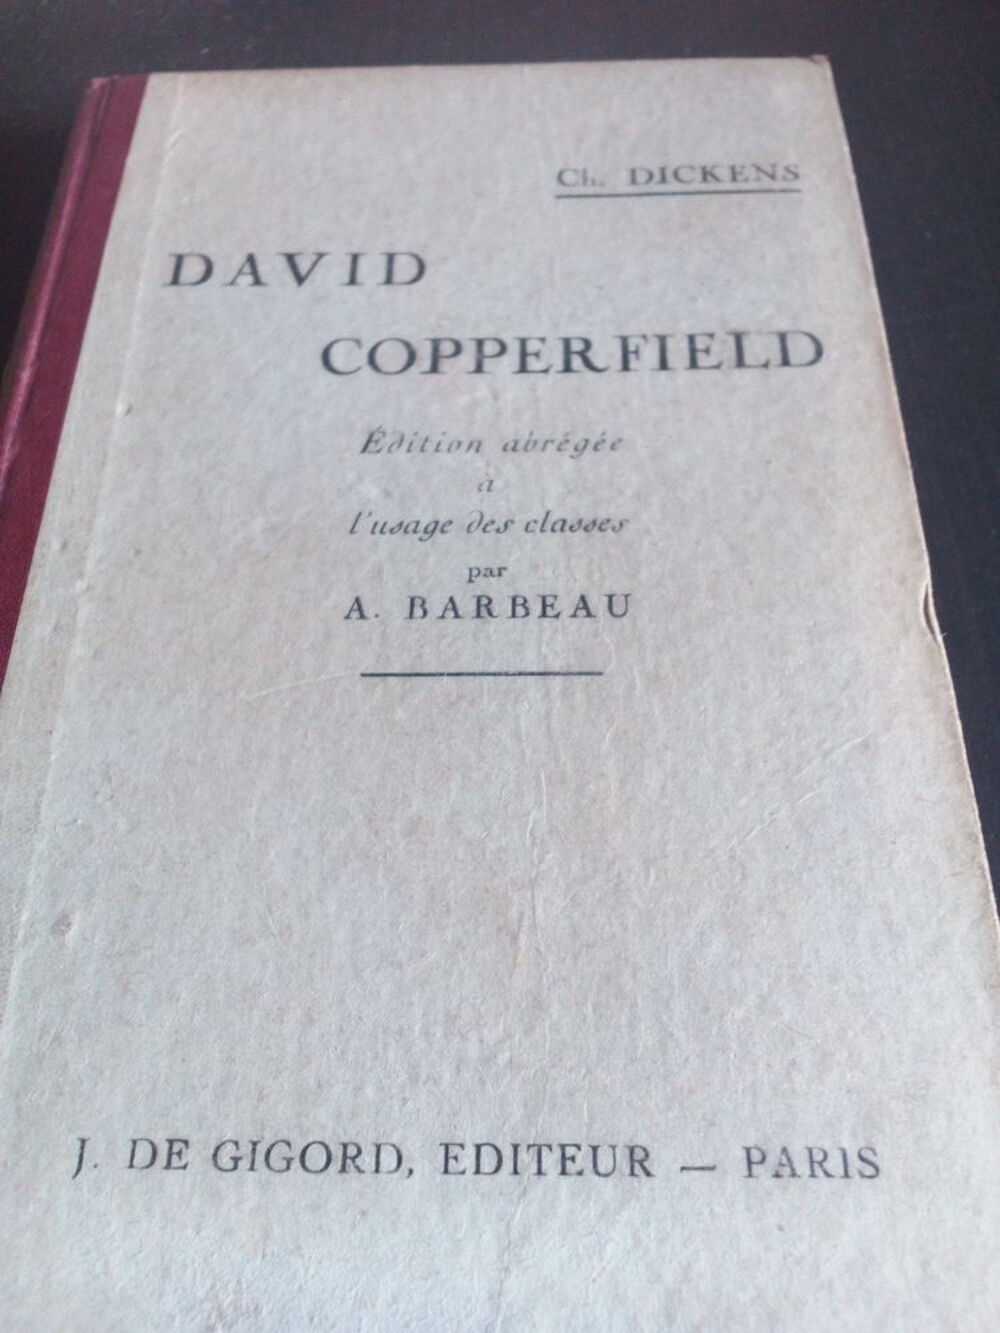 Ch. Dickens David Copperfield 1932 Livres et BD